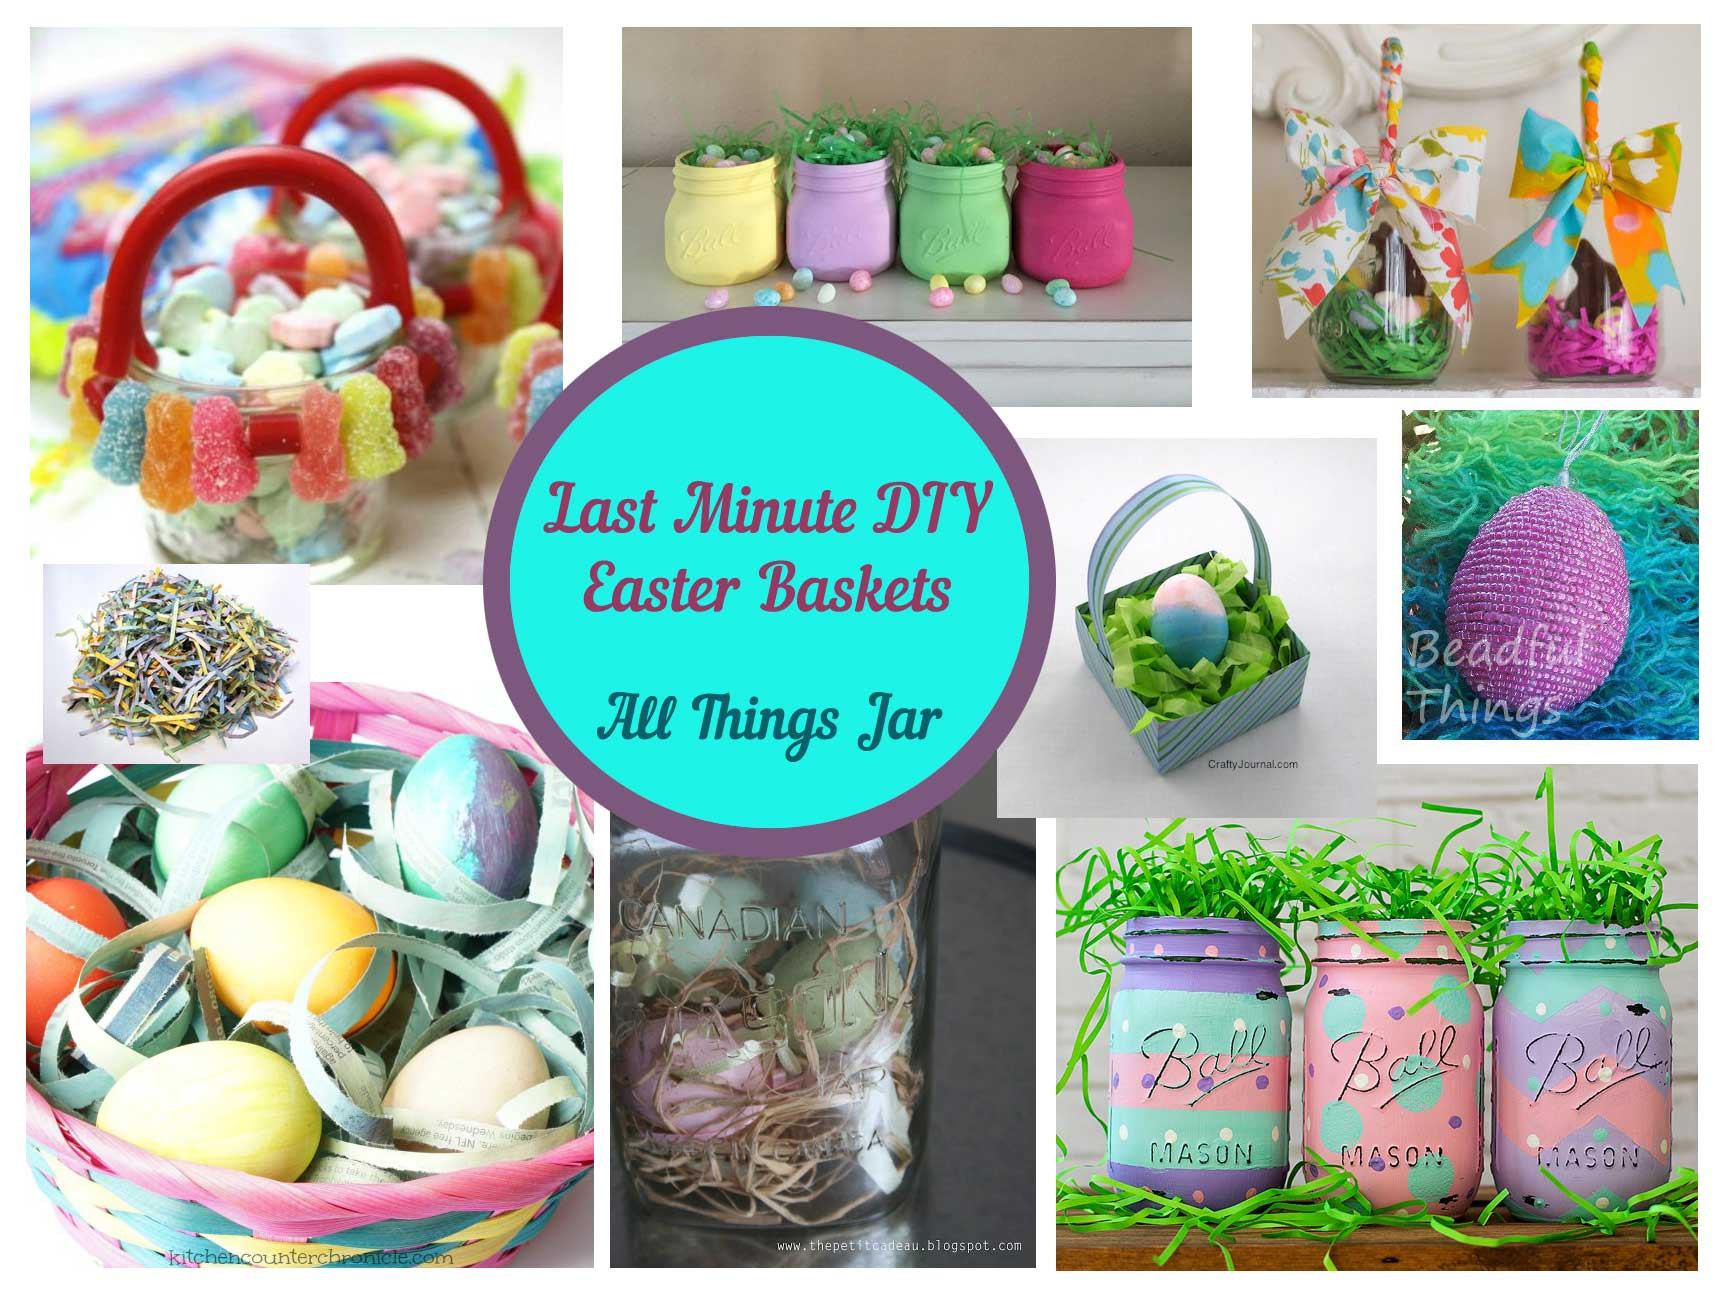 Last Minute Easter Gifts
 8 last minute DIY Easter baskets